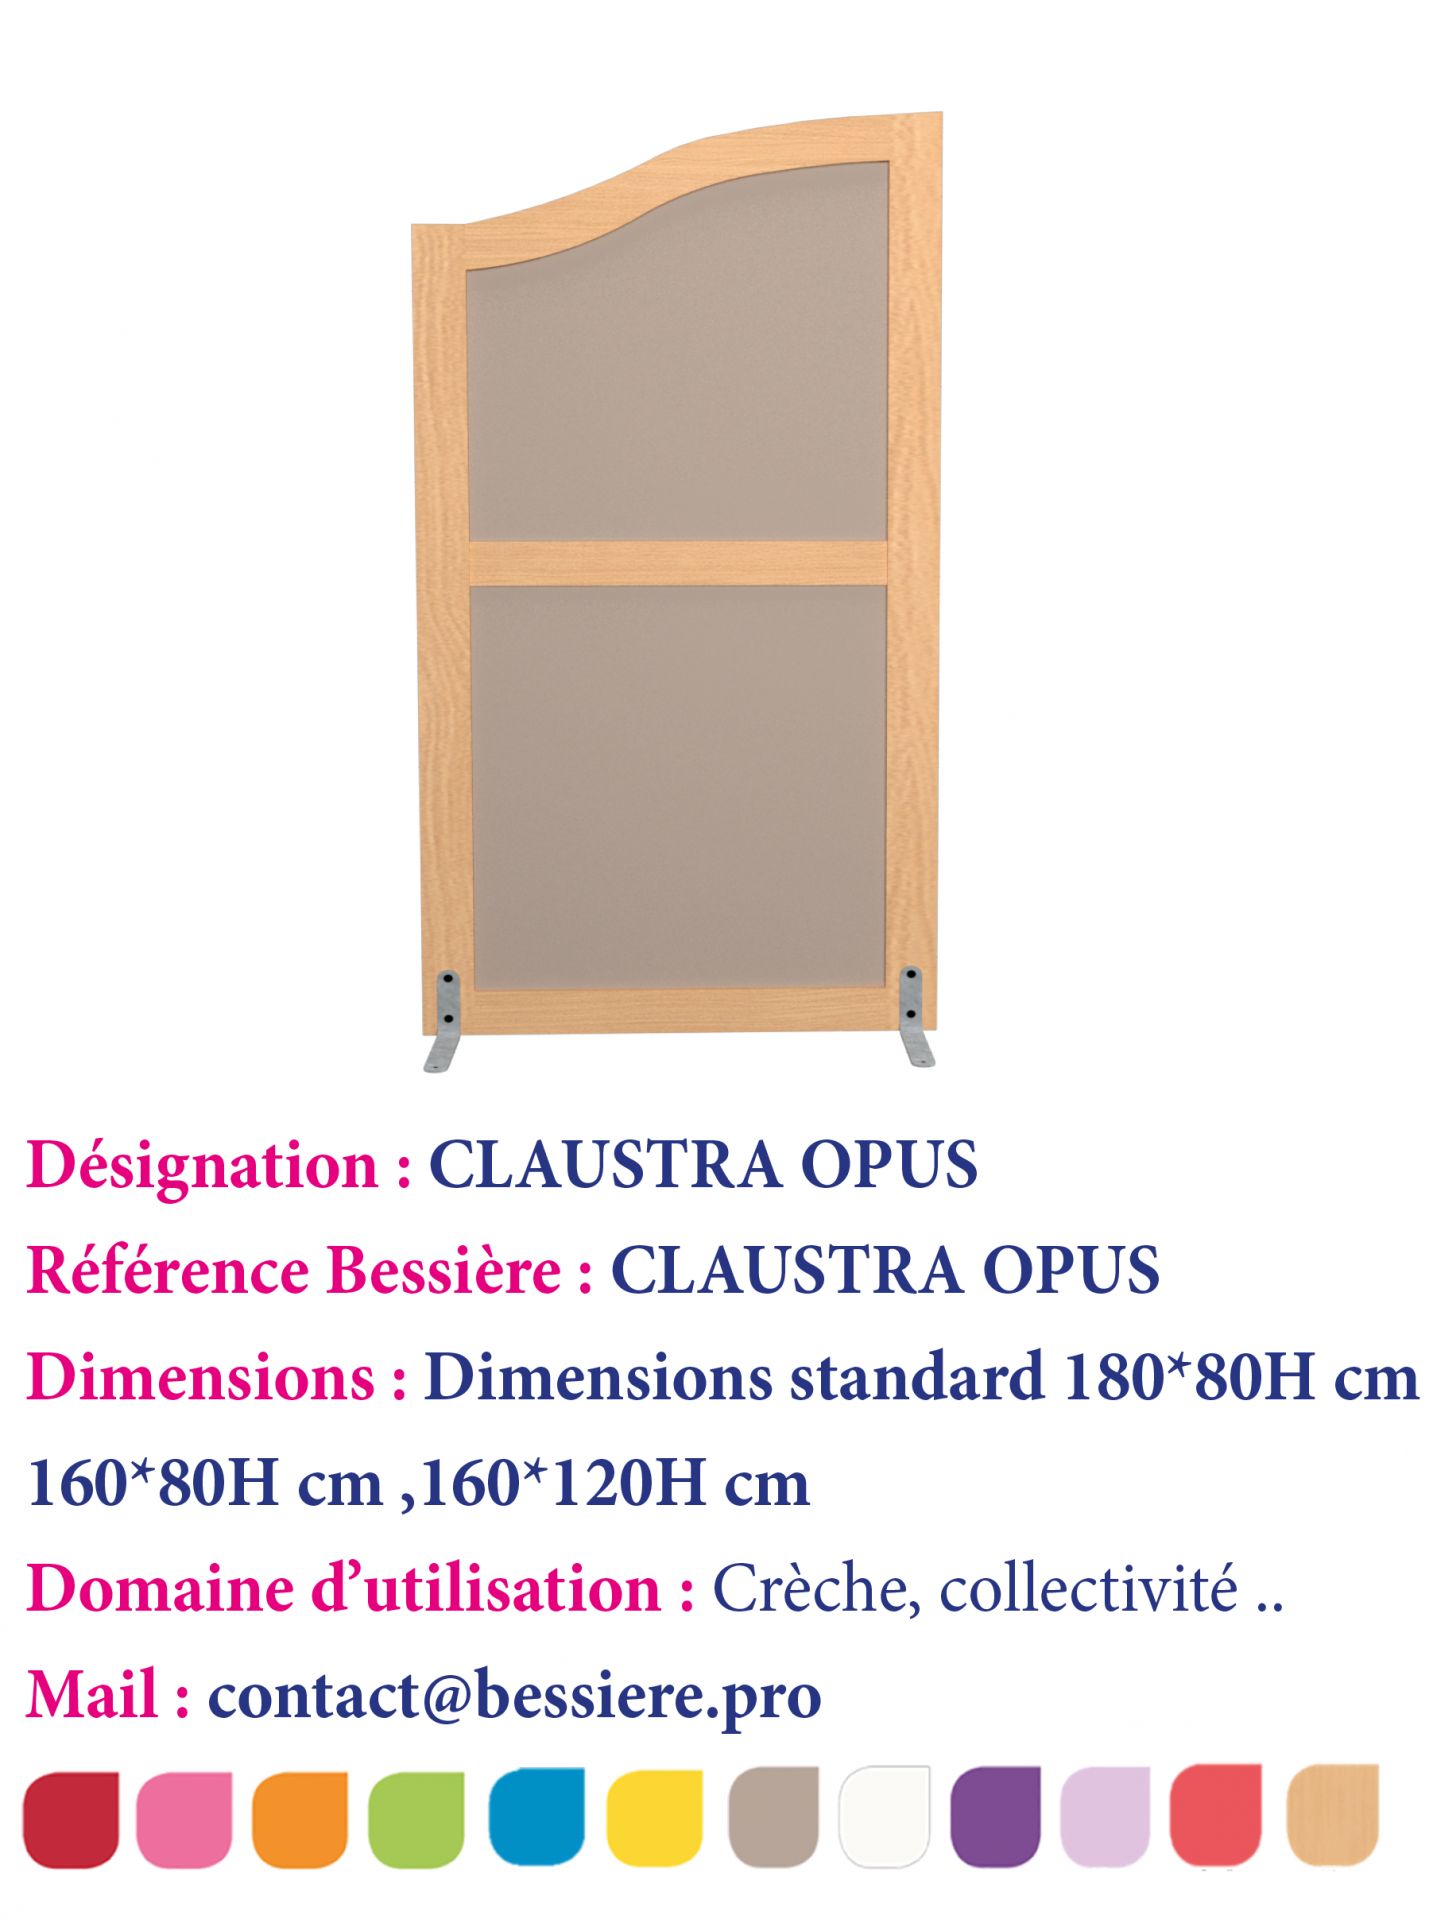 Claustra opus_0